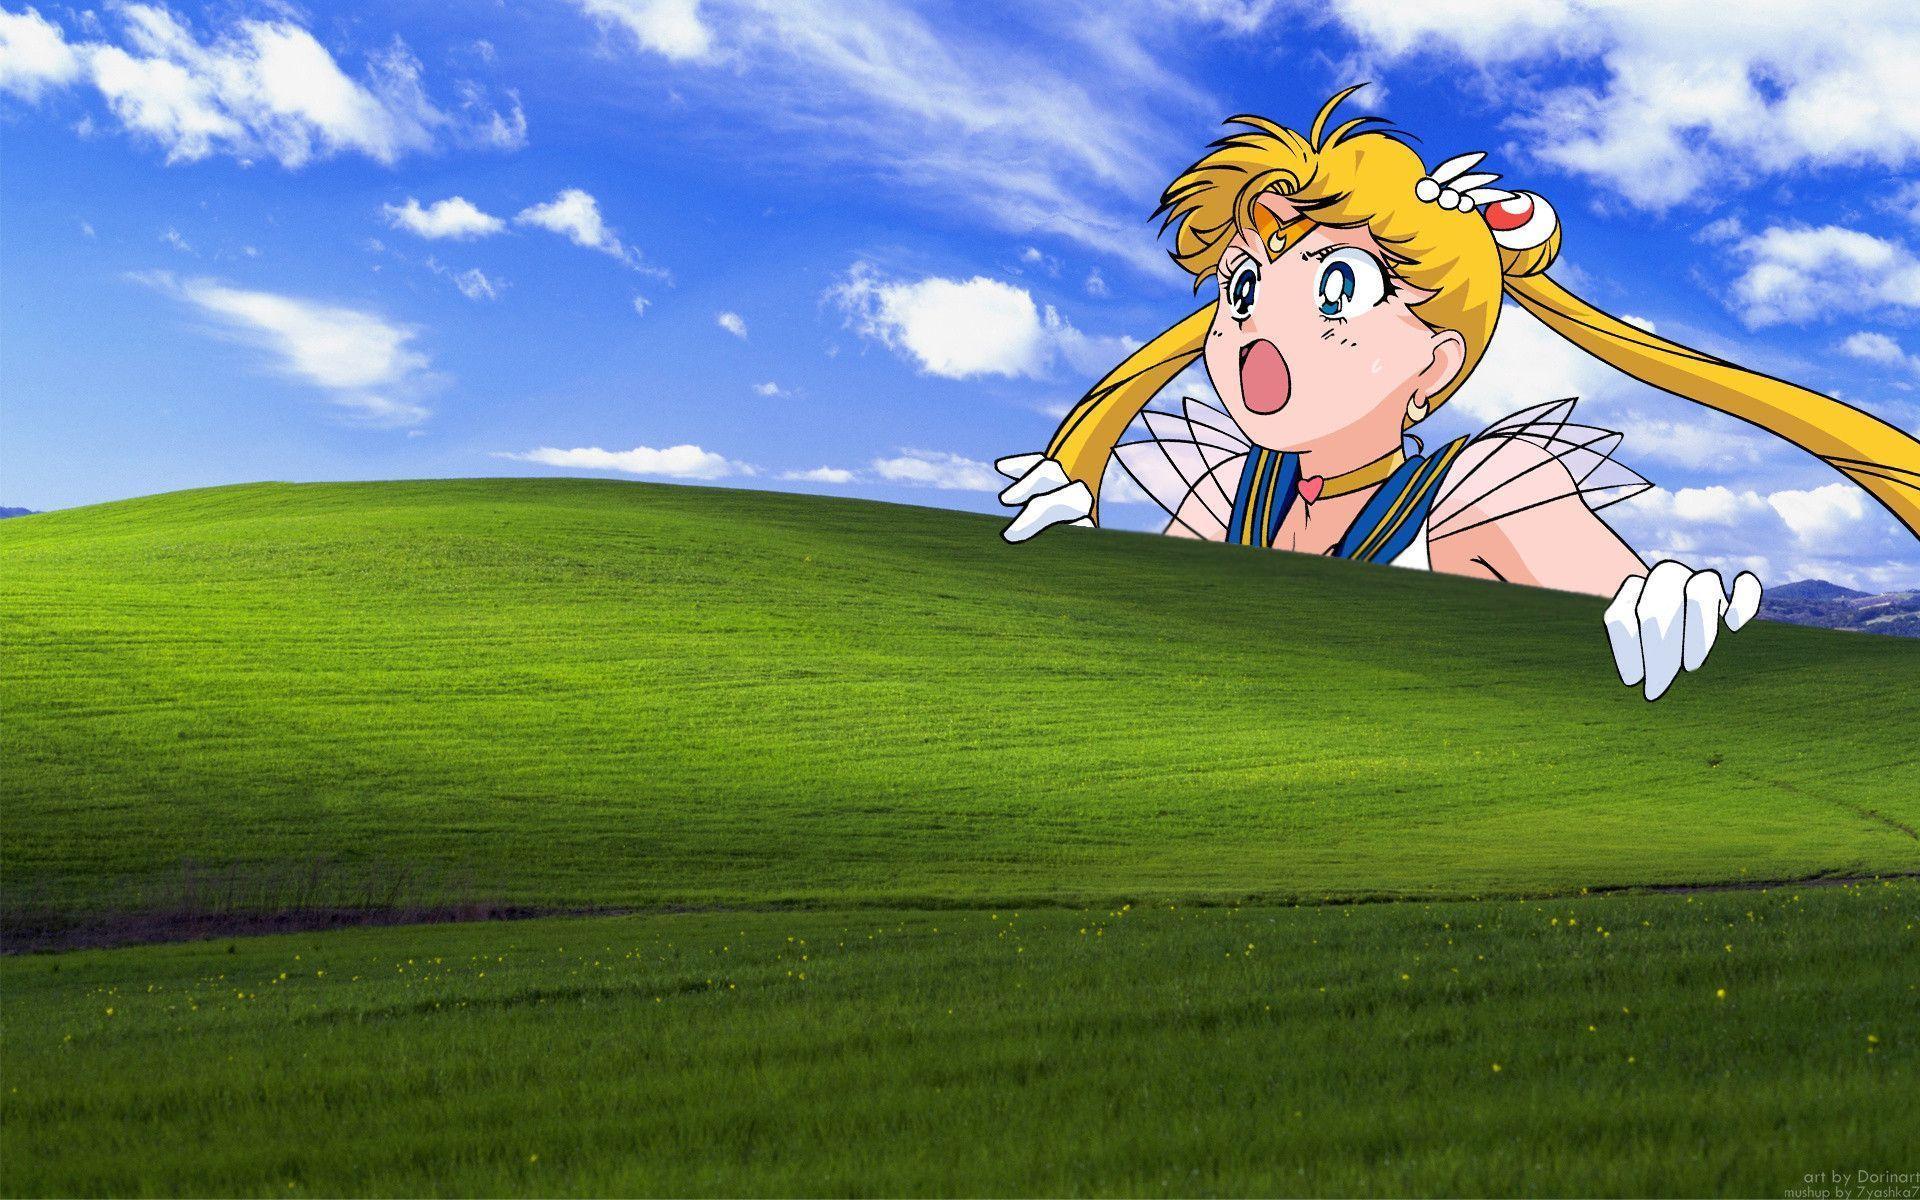 Sailor Moon Backgrounds - Wallpaper Cave